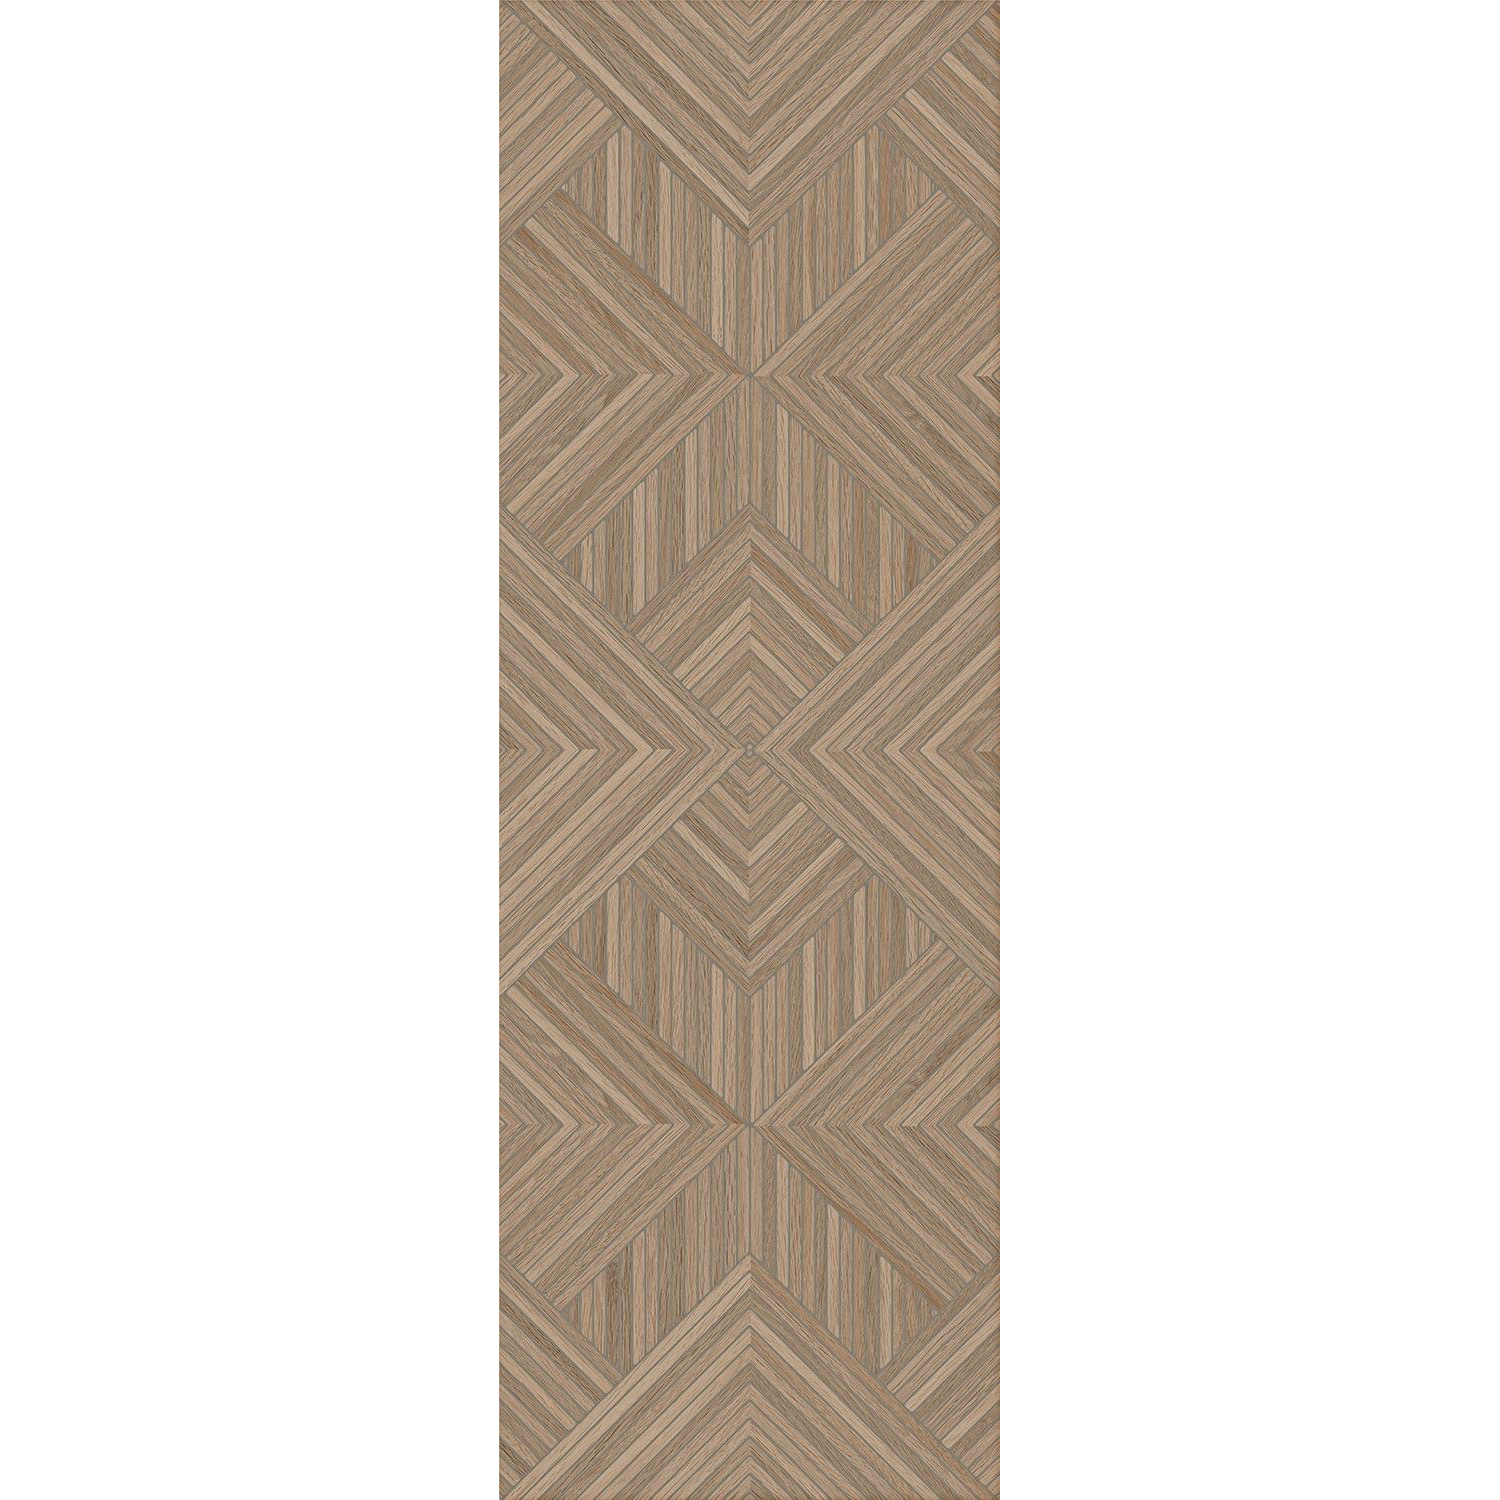 Плитка Kerama Marazzi Ламбро коричневый 14039R 40x120 см плитка 14039r ламбро коричневый структура обрезной 40 120